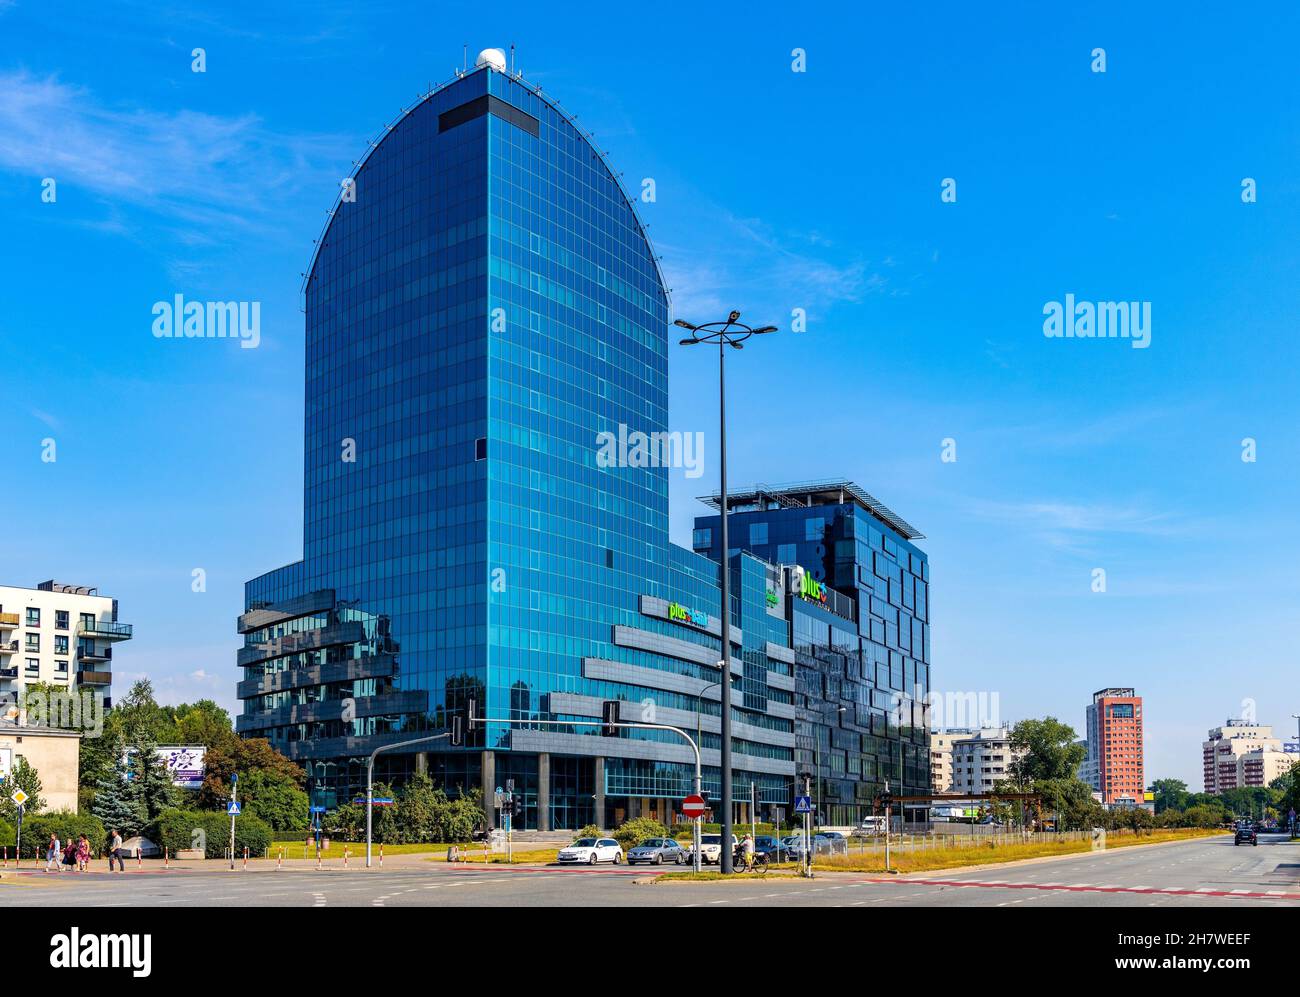 Warschau, Mazovia / Polen - 2020/08/09: Panoramablick auf den Bezirk South Praga Poludnie mit dem Bürogebäude Blue Point bei al. Stanow Zjednoczonych Ave Stockfoto